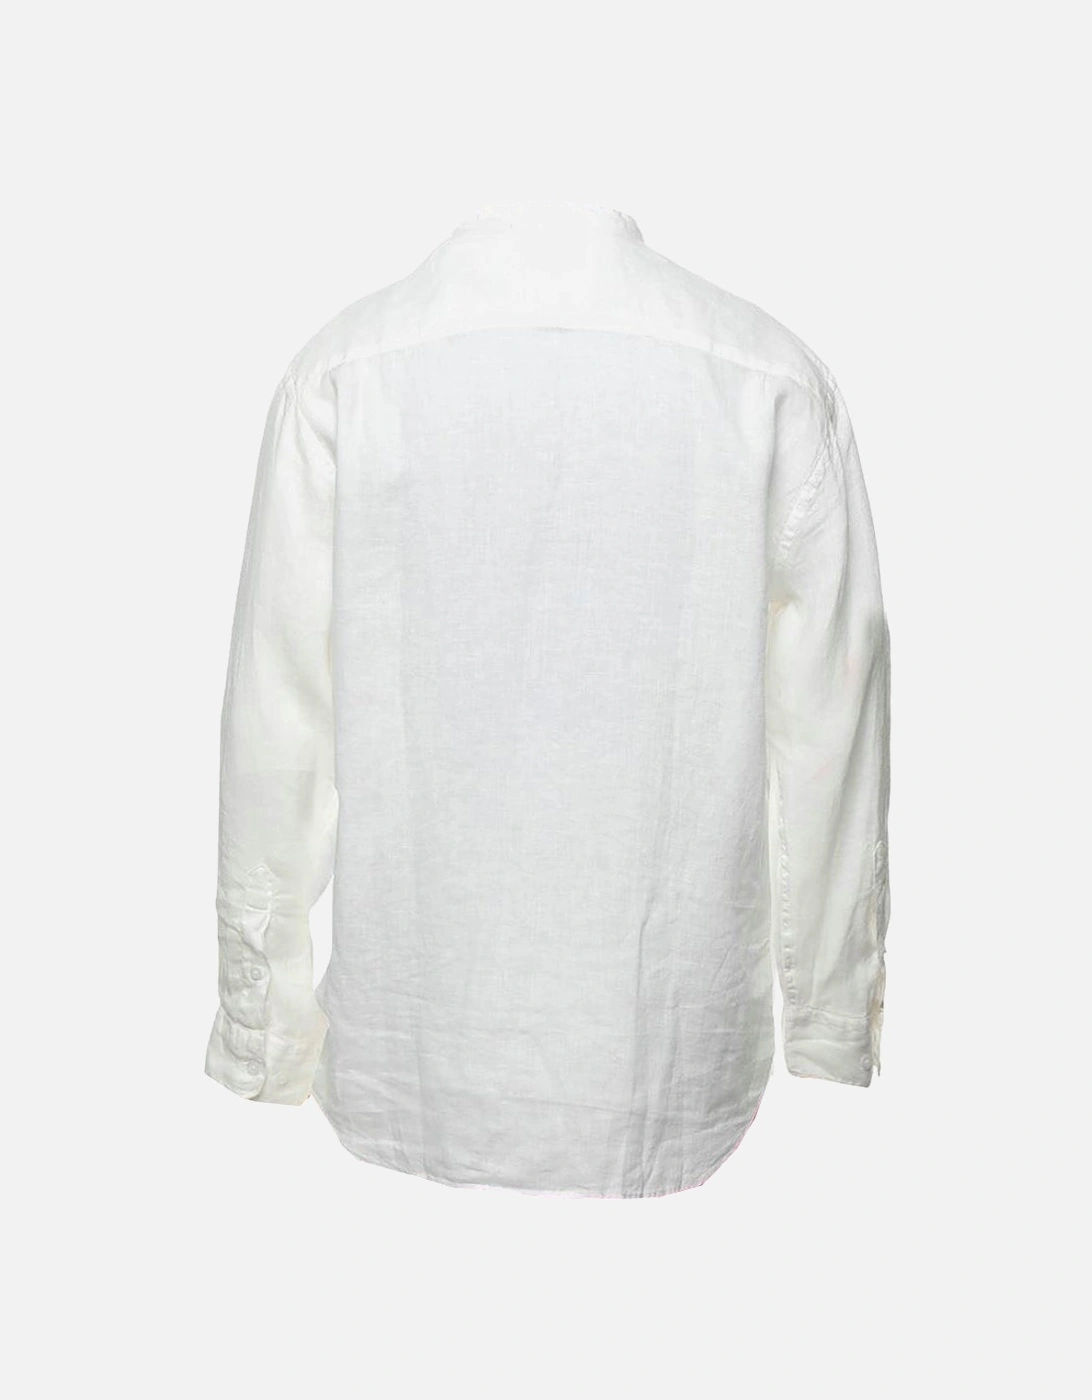 C.P. Company White Caual Shirt